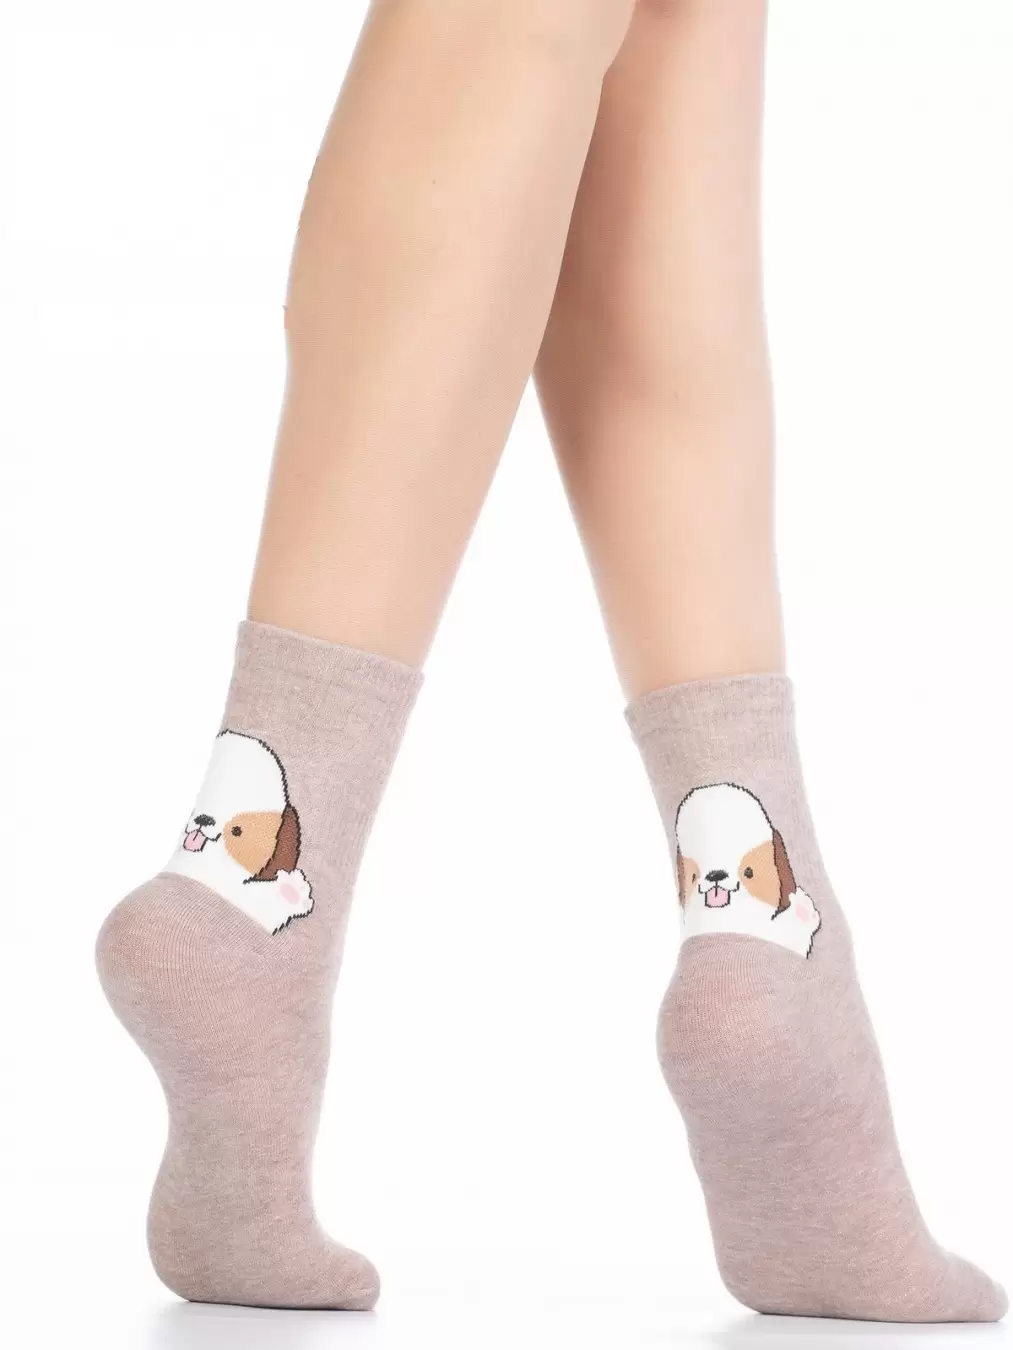 Hobby Line 420-1, носки женские Собачки-щенятки (изображение 1)